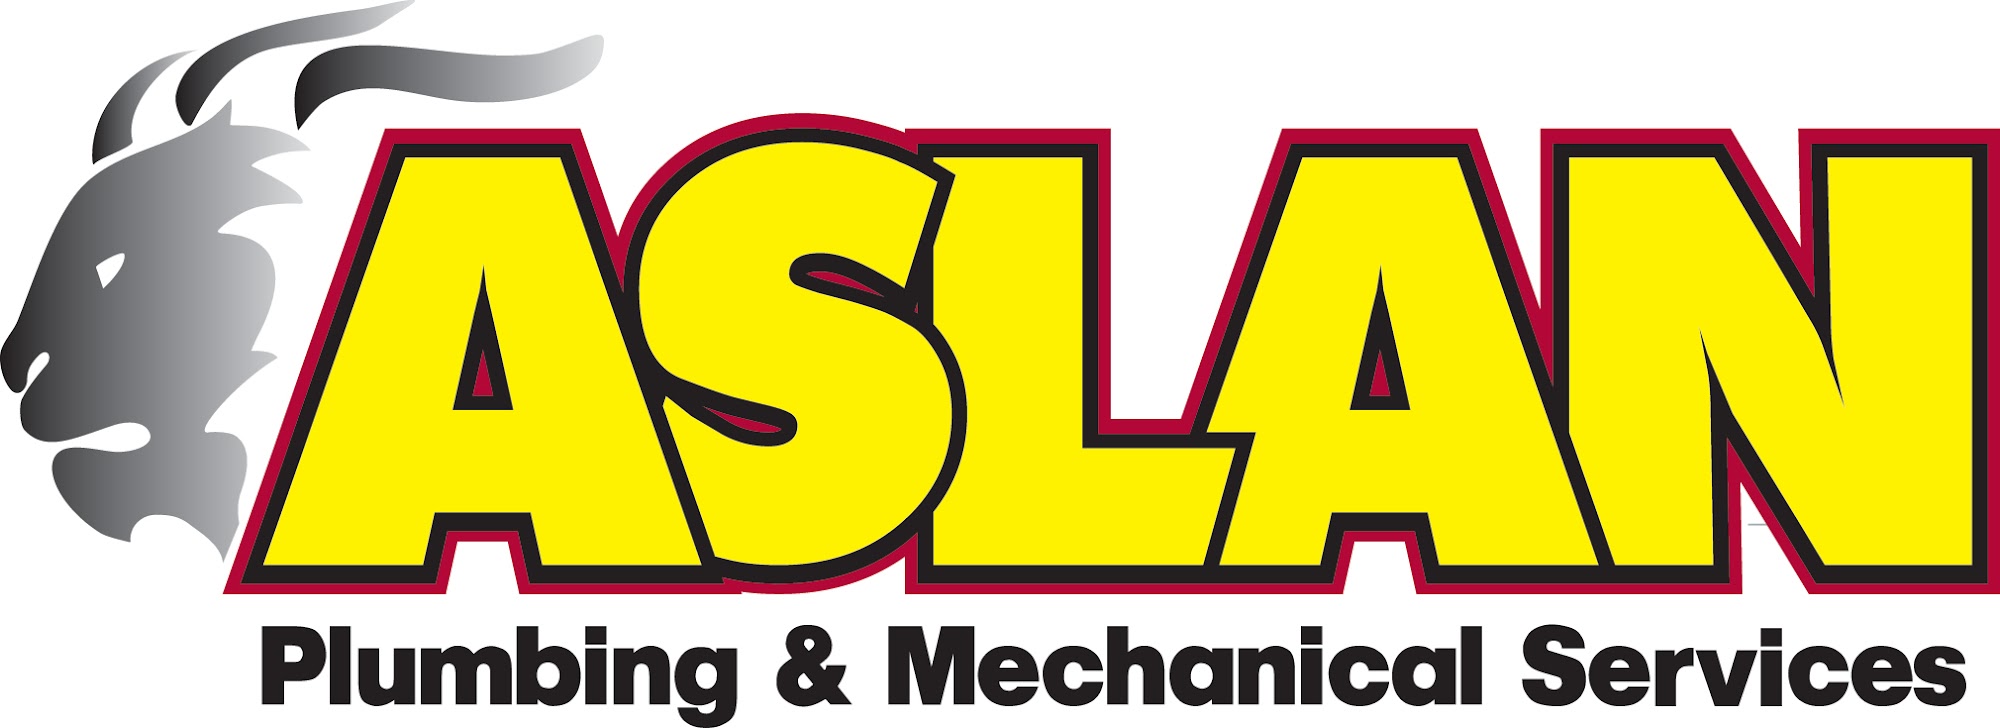 Aslan Plumbing & Mechanical Services